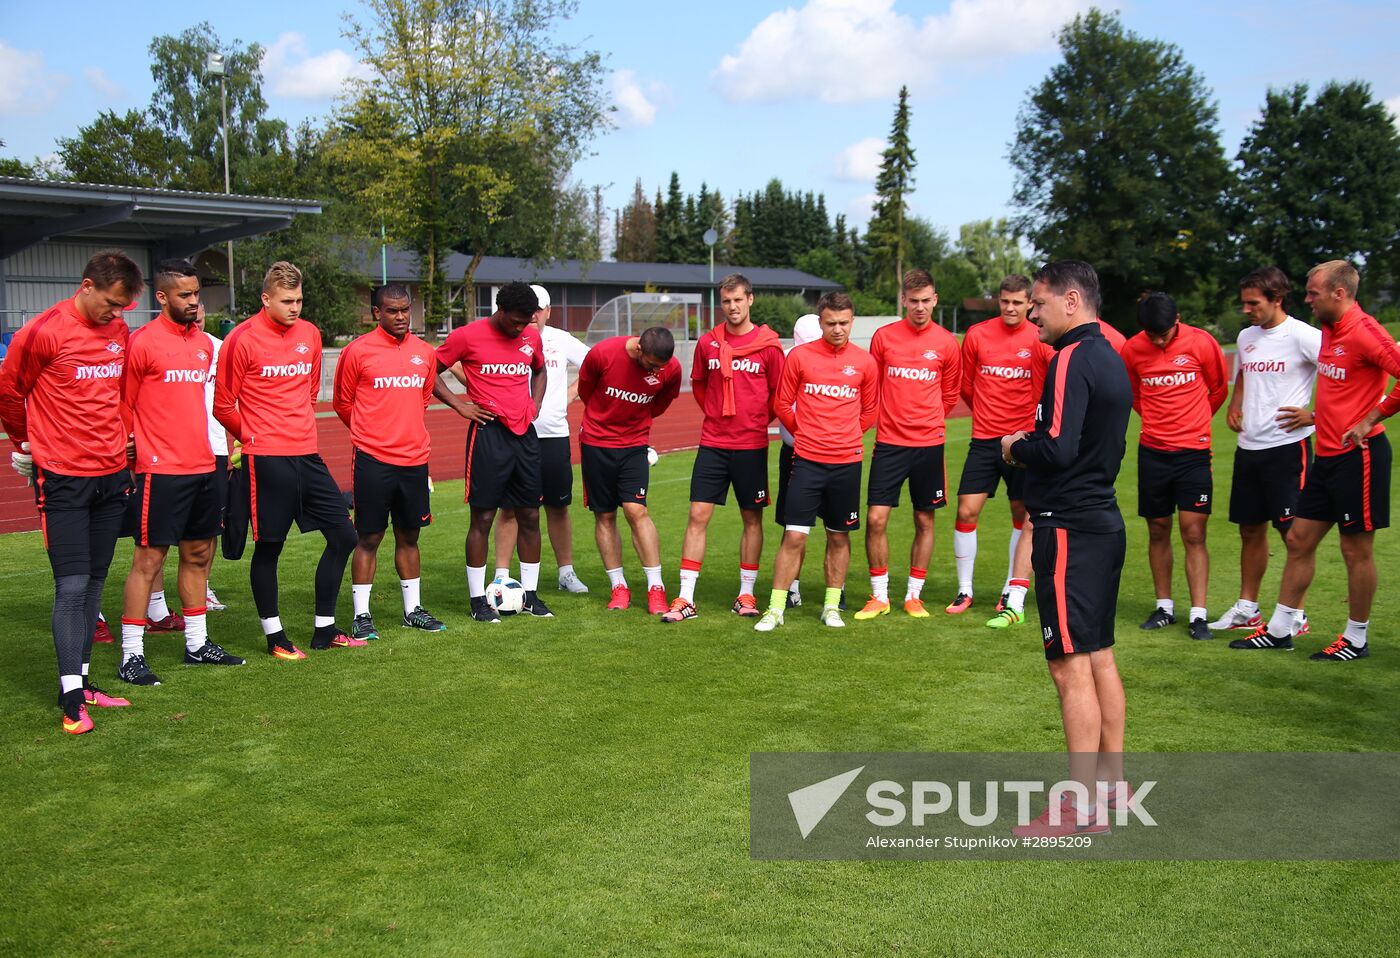 Spartak Football Club training session